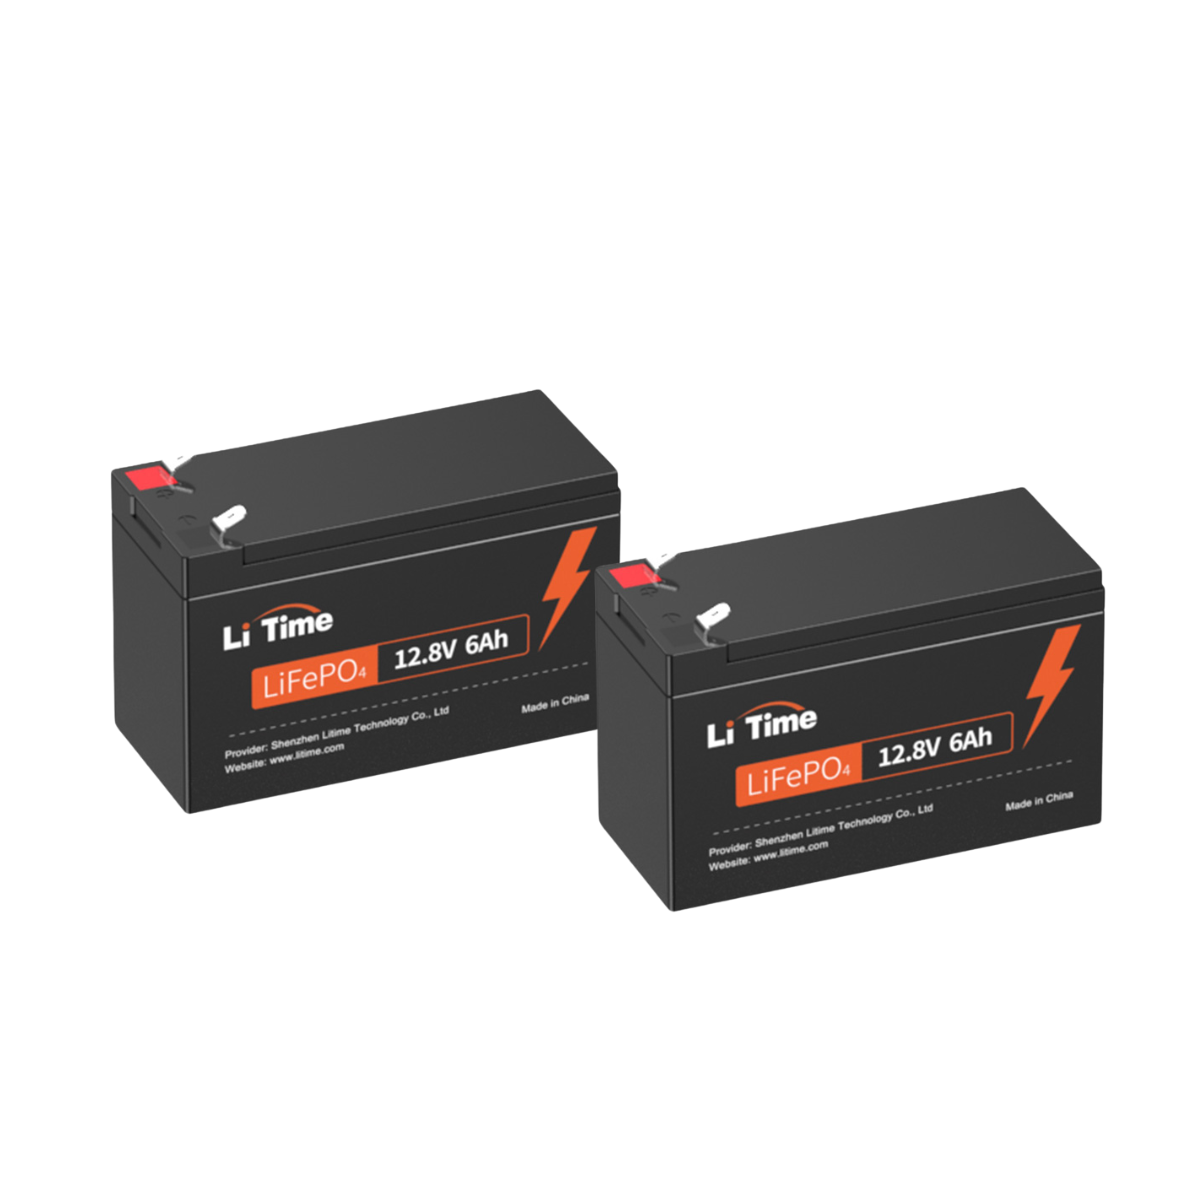 LiTime 12V 6Ah LiFePO4 Batterie, Eingebautes 6A BMS 76,8W Ausgangsleistung, 4000+ Tiefe Zyklen